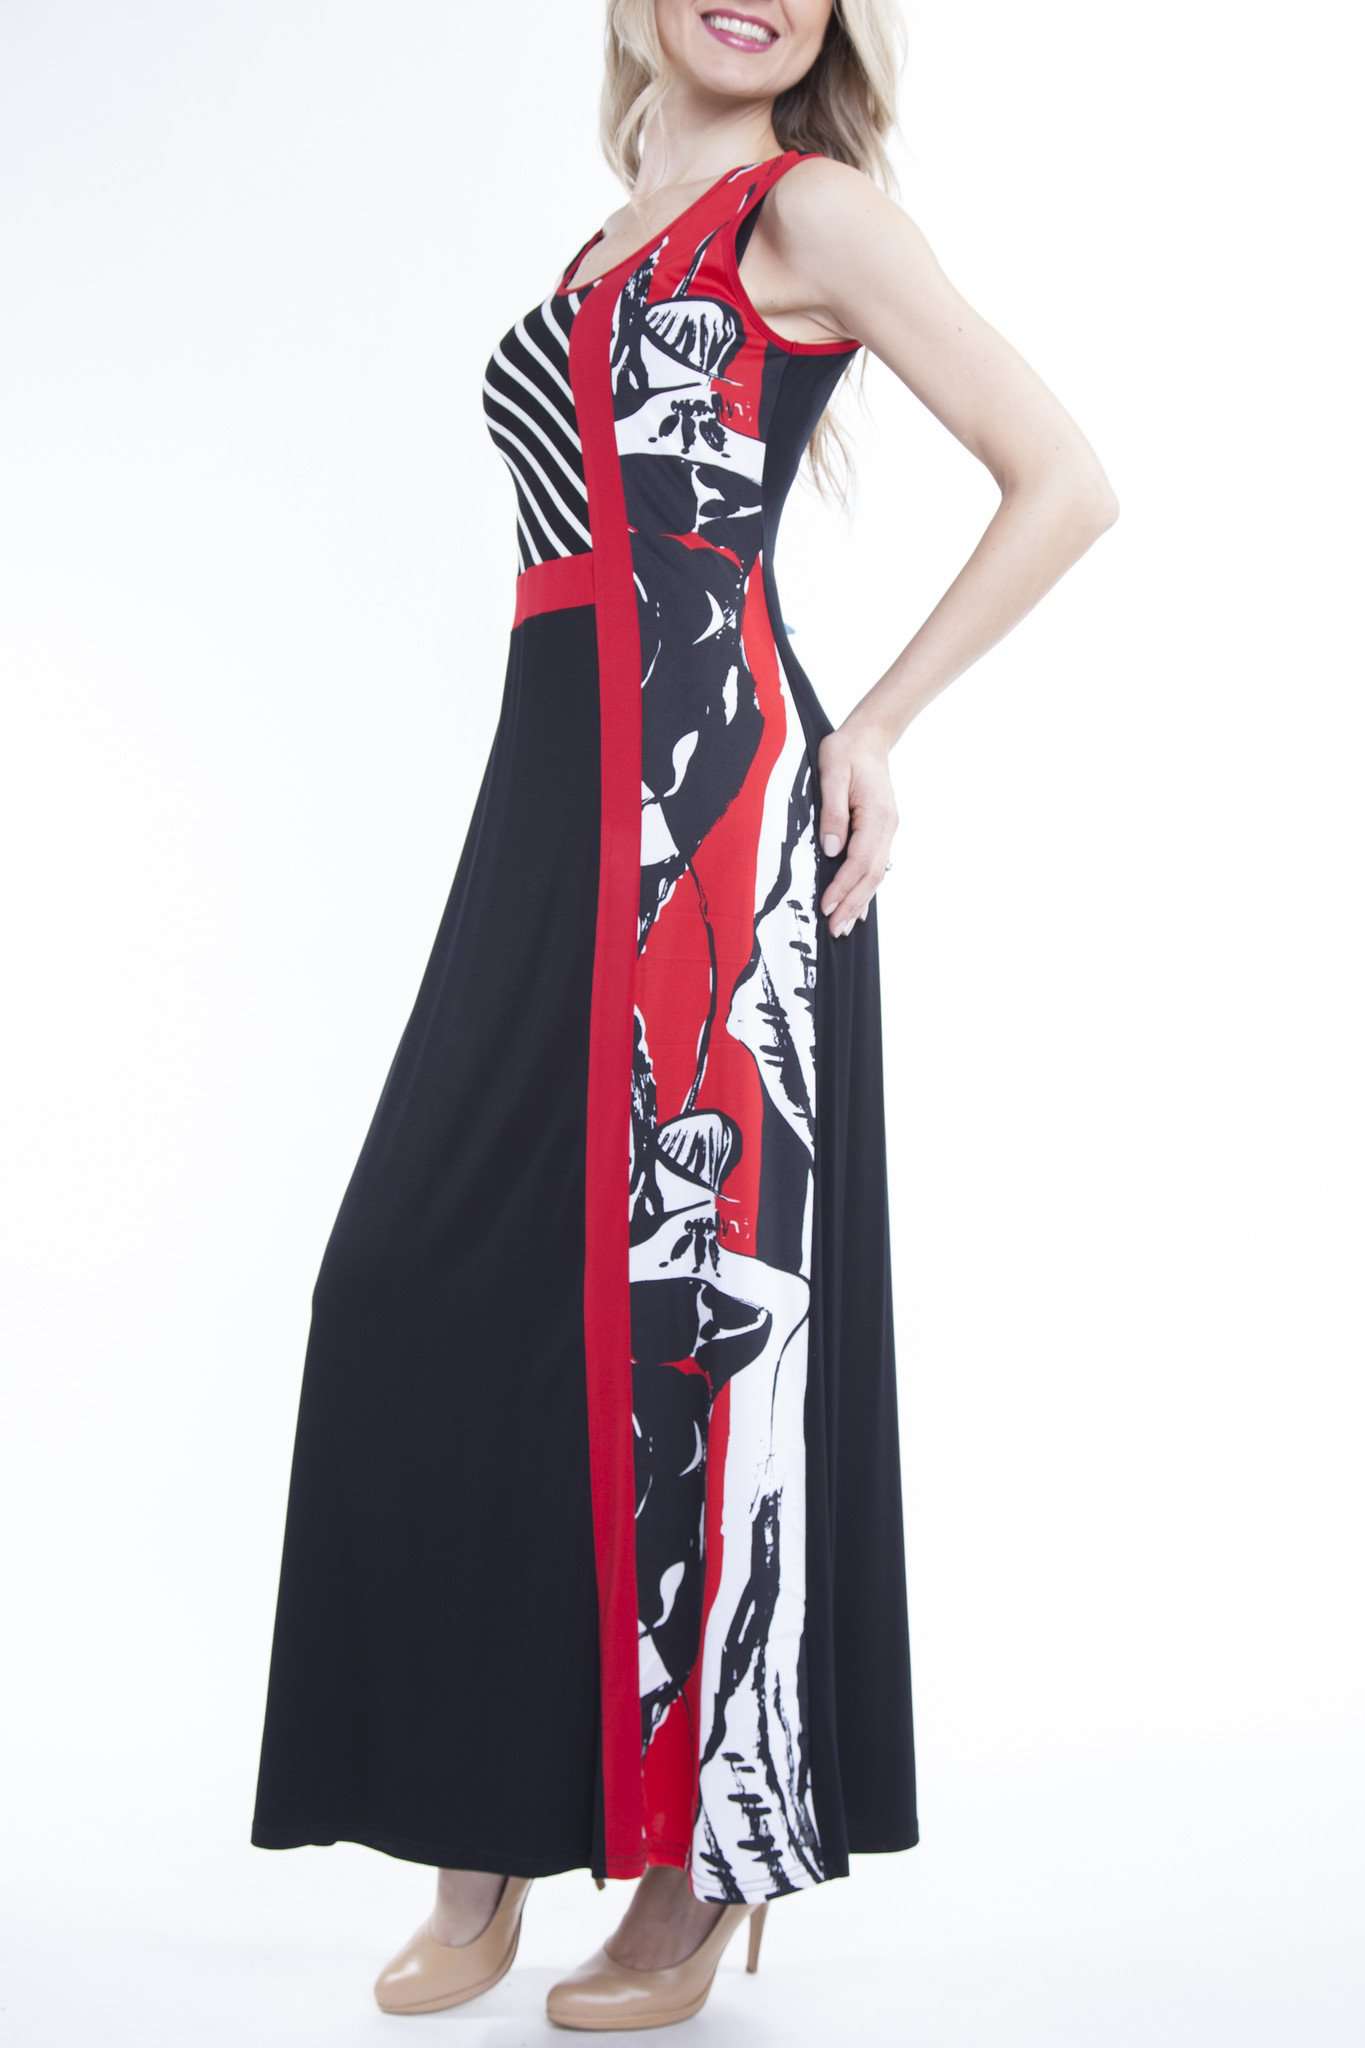 Designer Maxi Dress On sale Now 70% Off Quality Stretch Fabric Designer Original Yvonne Marie Boutiques Made In Canadaa - Yvonne Marie - Yvonne Marie